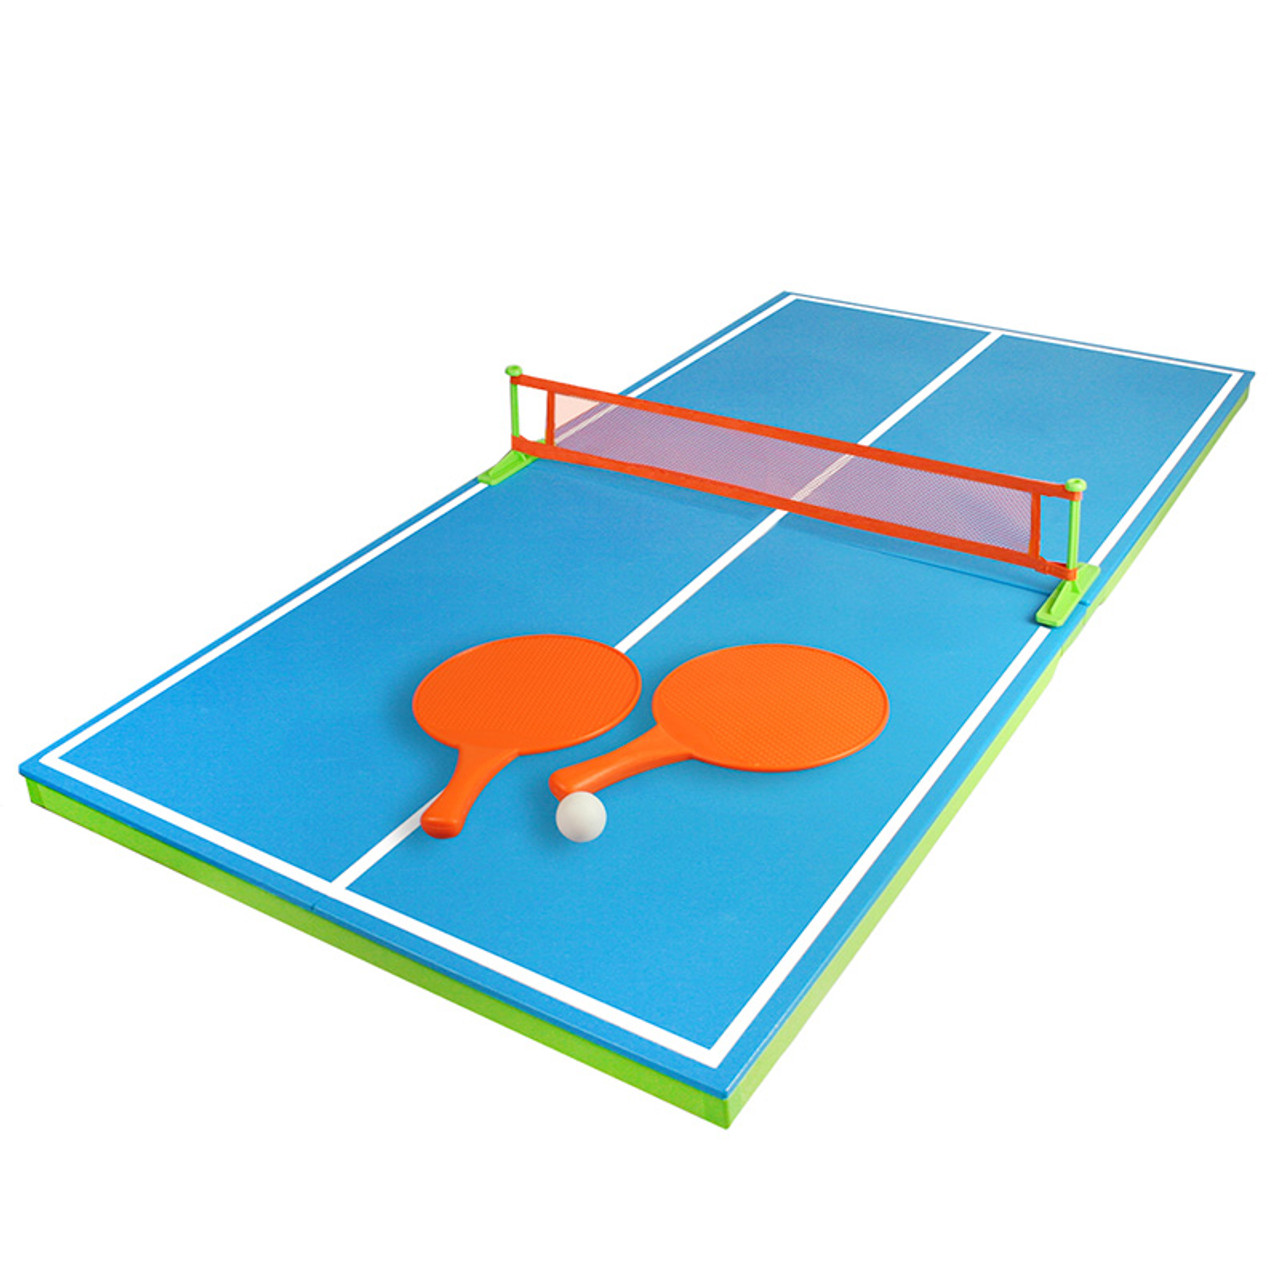 54 Blue & Orange Floating Ping-Pong Table Swimming Pool Game